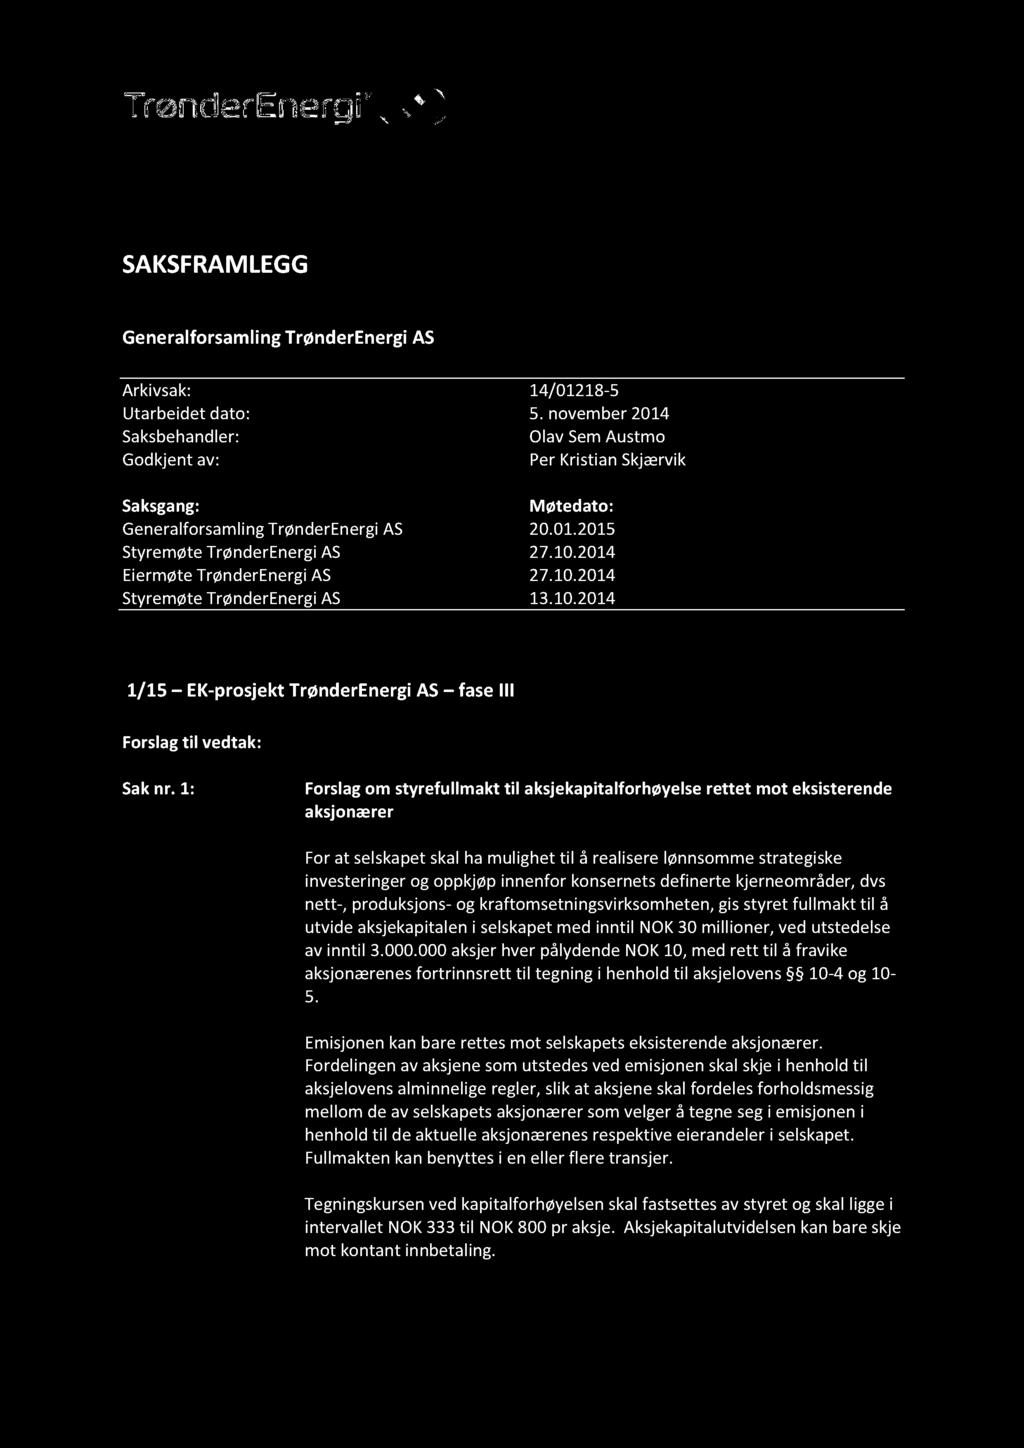 2014 EiermøteTrønderEnergiAS 27.10.2014 StyremøteTrønderEnergiAS 13.10.2014 1/15 EK-prosjekt TrønderEnergiAS faseiii Forslagtil vedtak: Saknr.